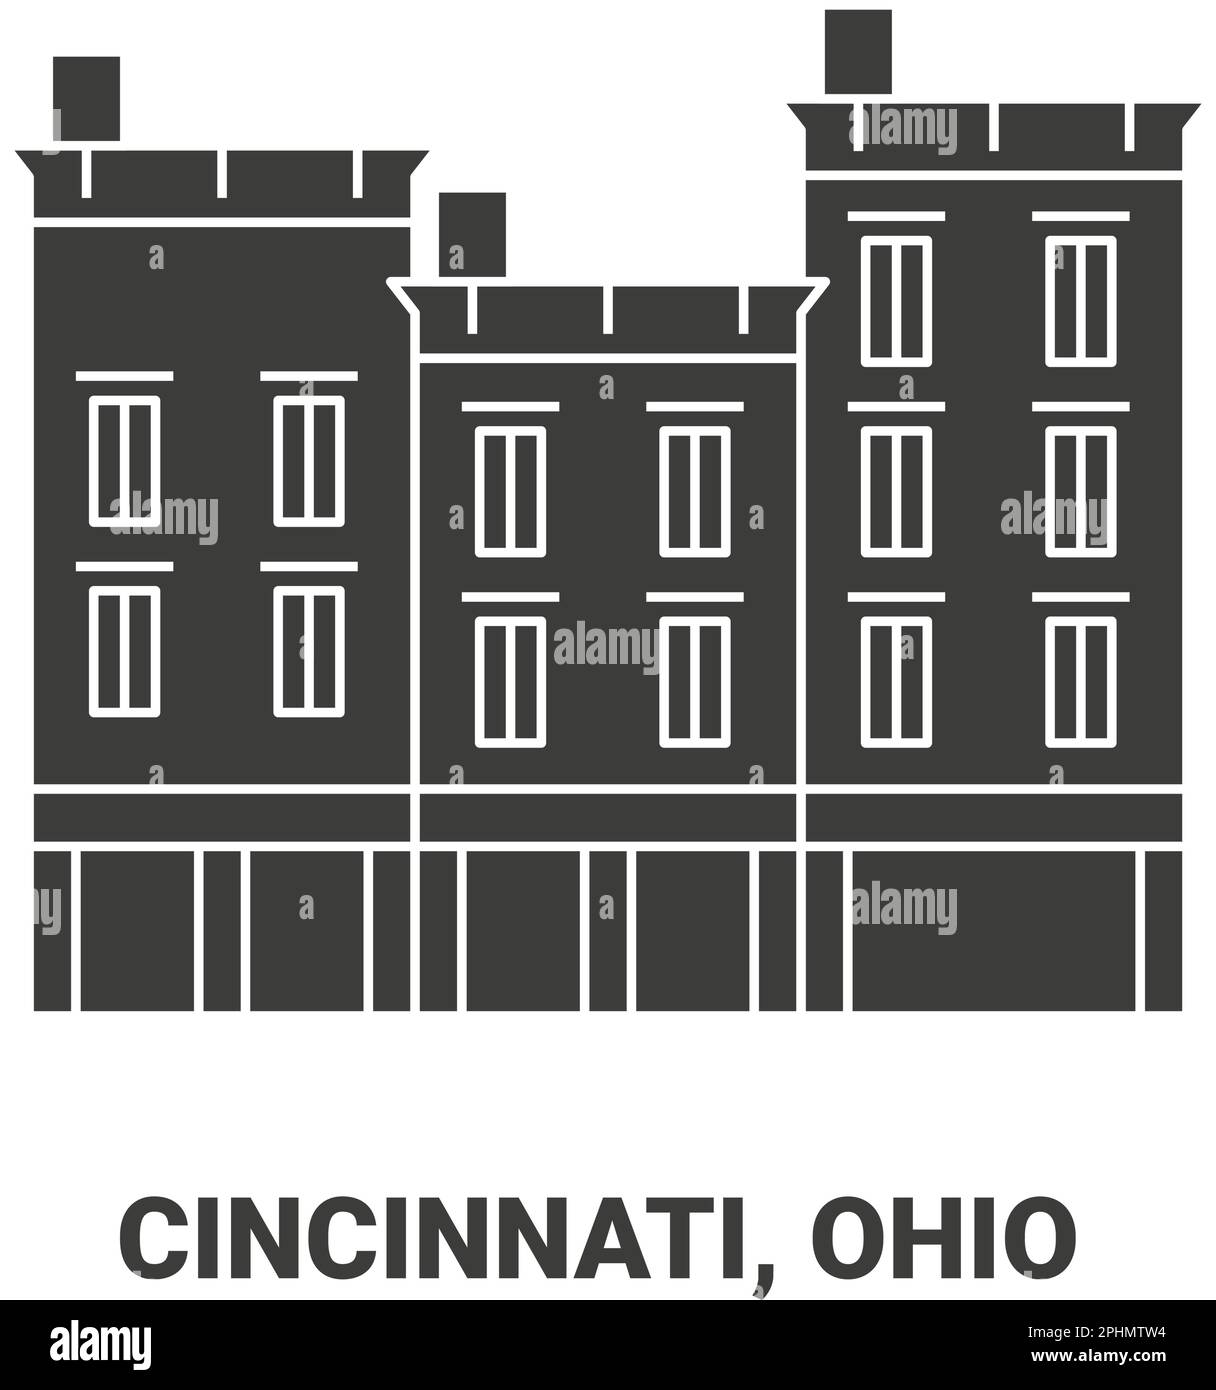 United States, Cincinnati, Ohio travel landmark vector illustration Stock Vector